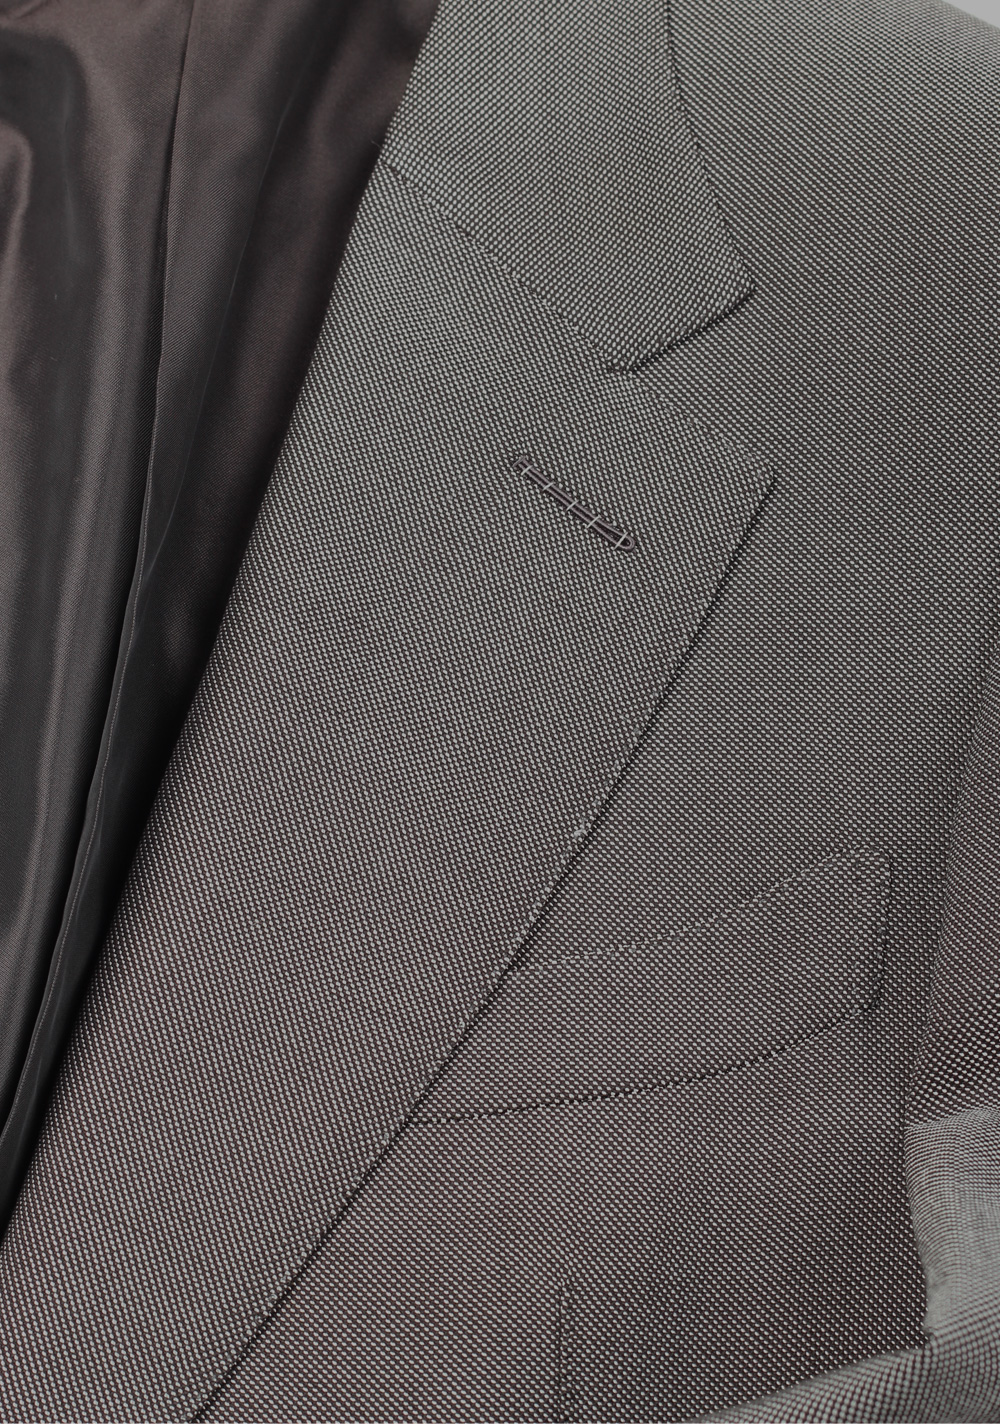 TOM FORD Gray  Sport Coat Size 48 / 38R U.S. Base A | Costume Limité